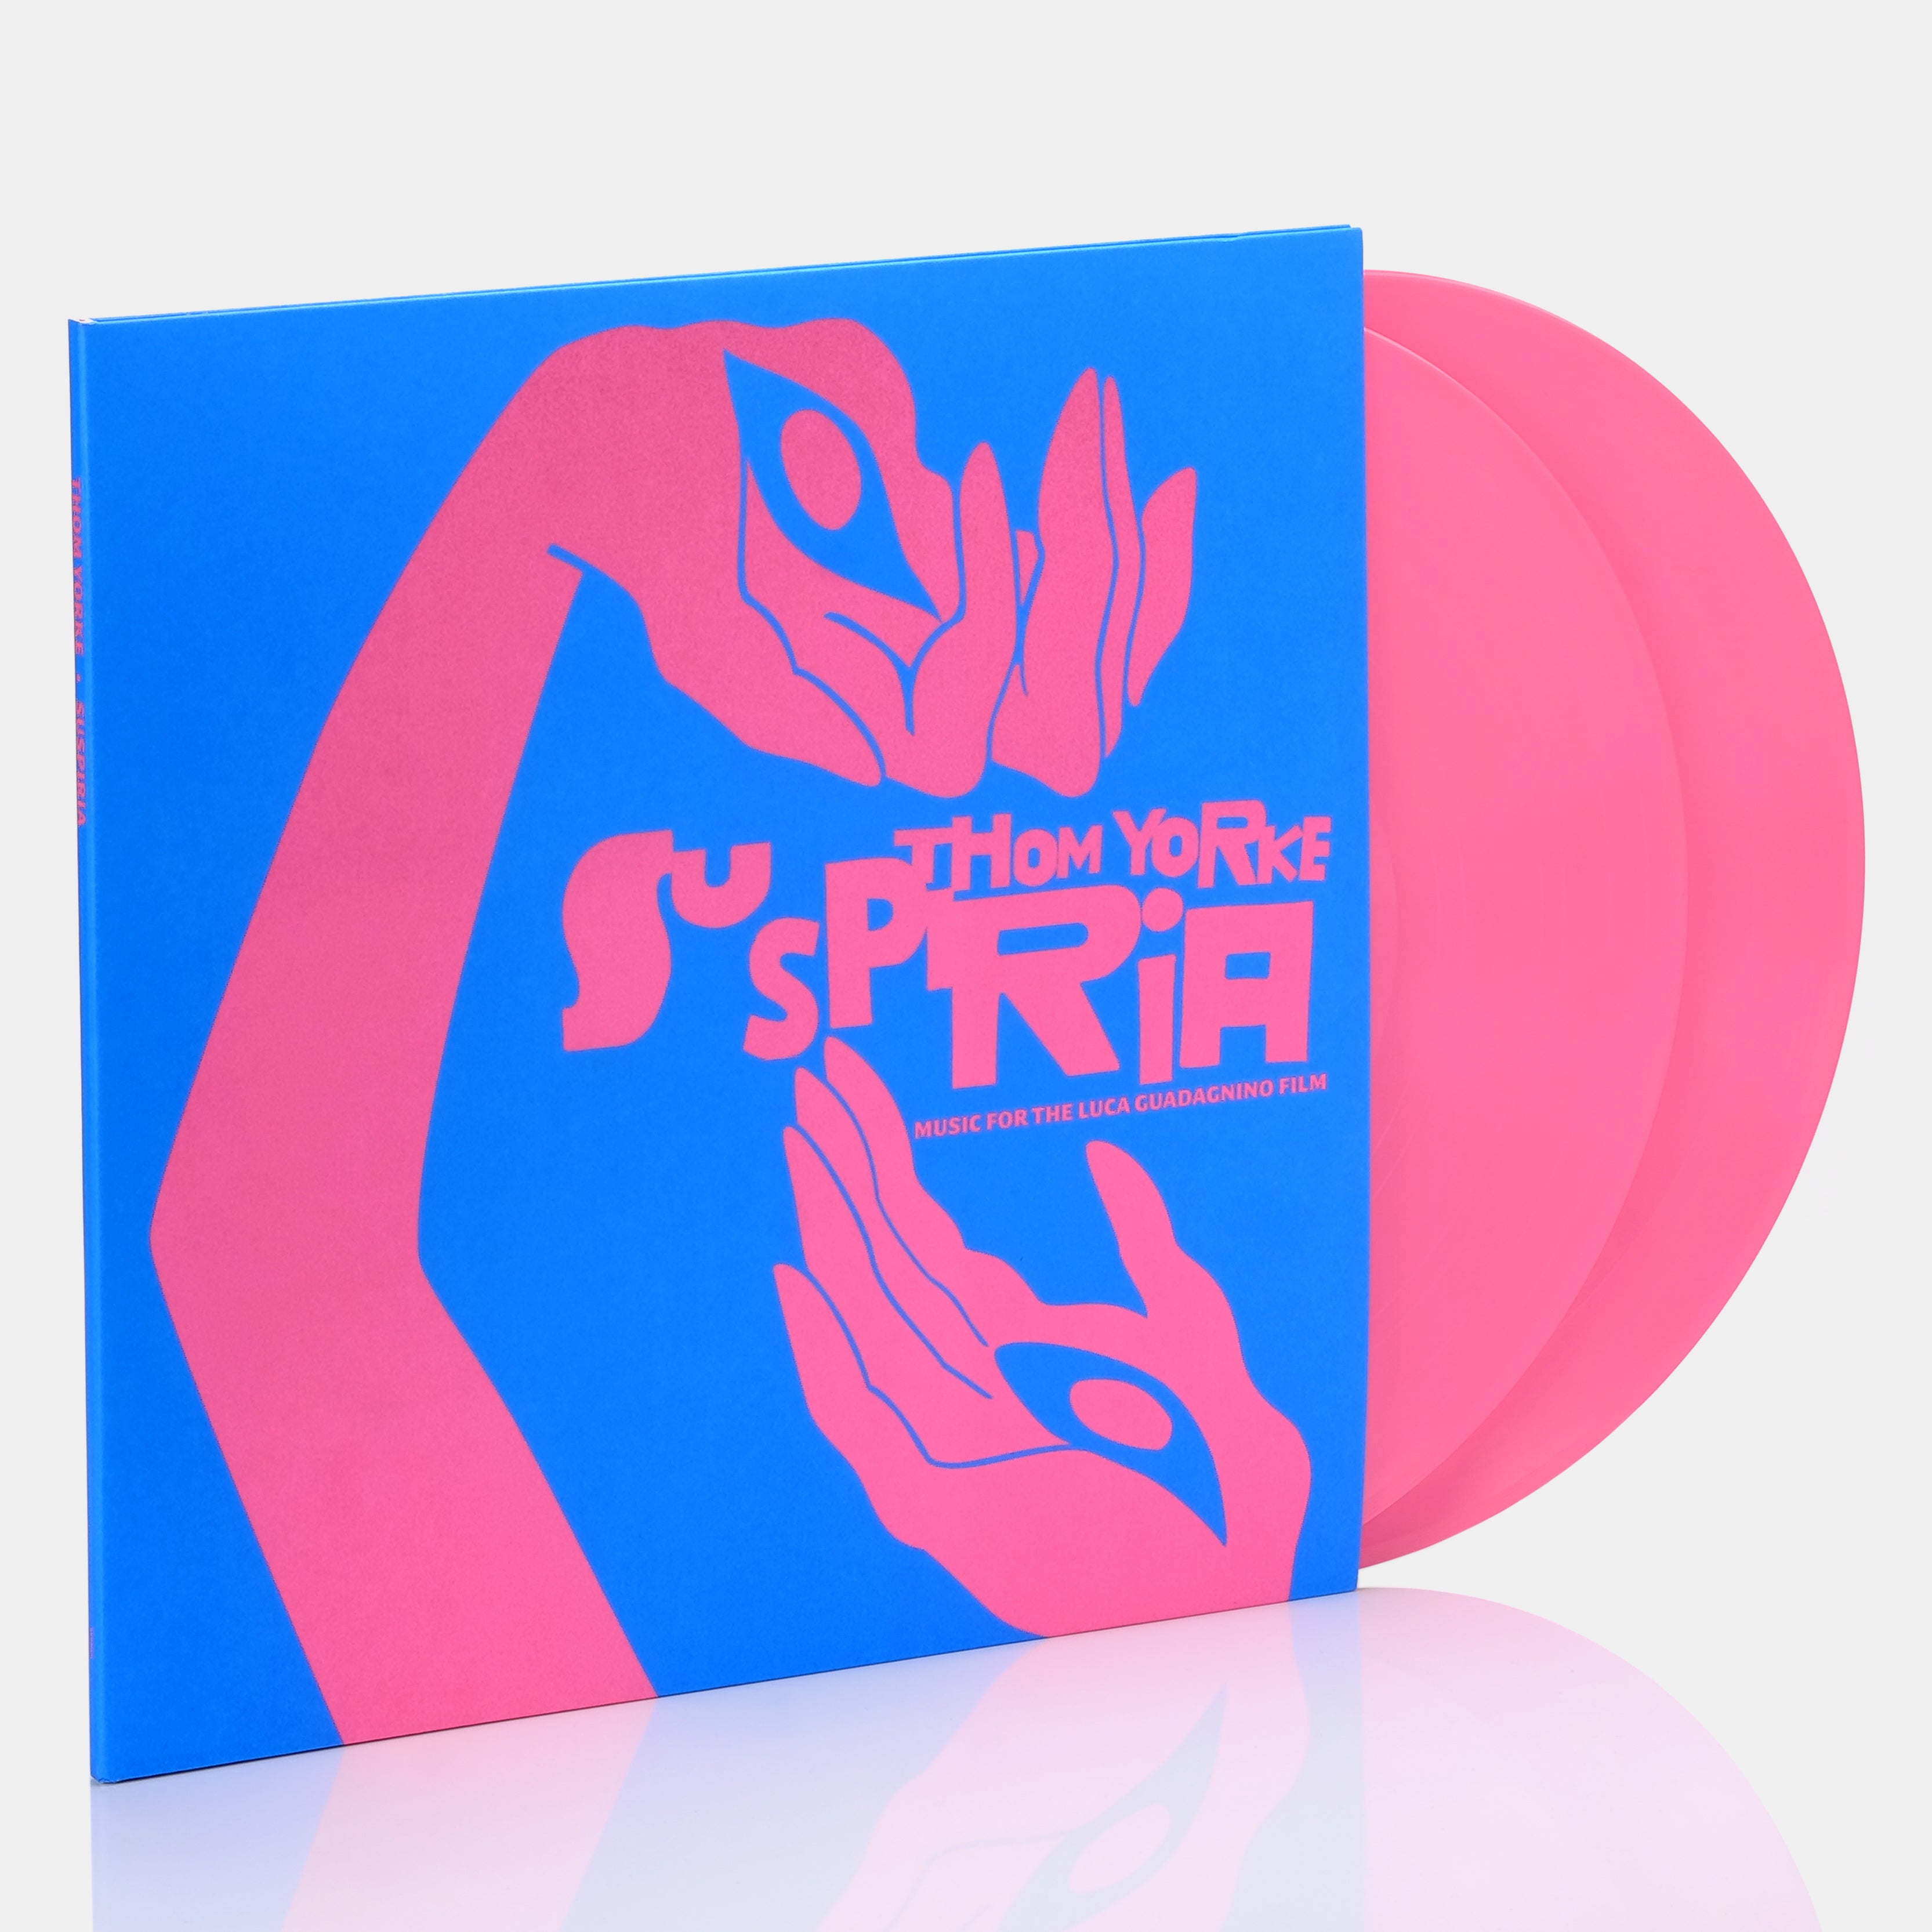 Thom Yorke - Suspiria 2xLP Pink Vinyl Record